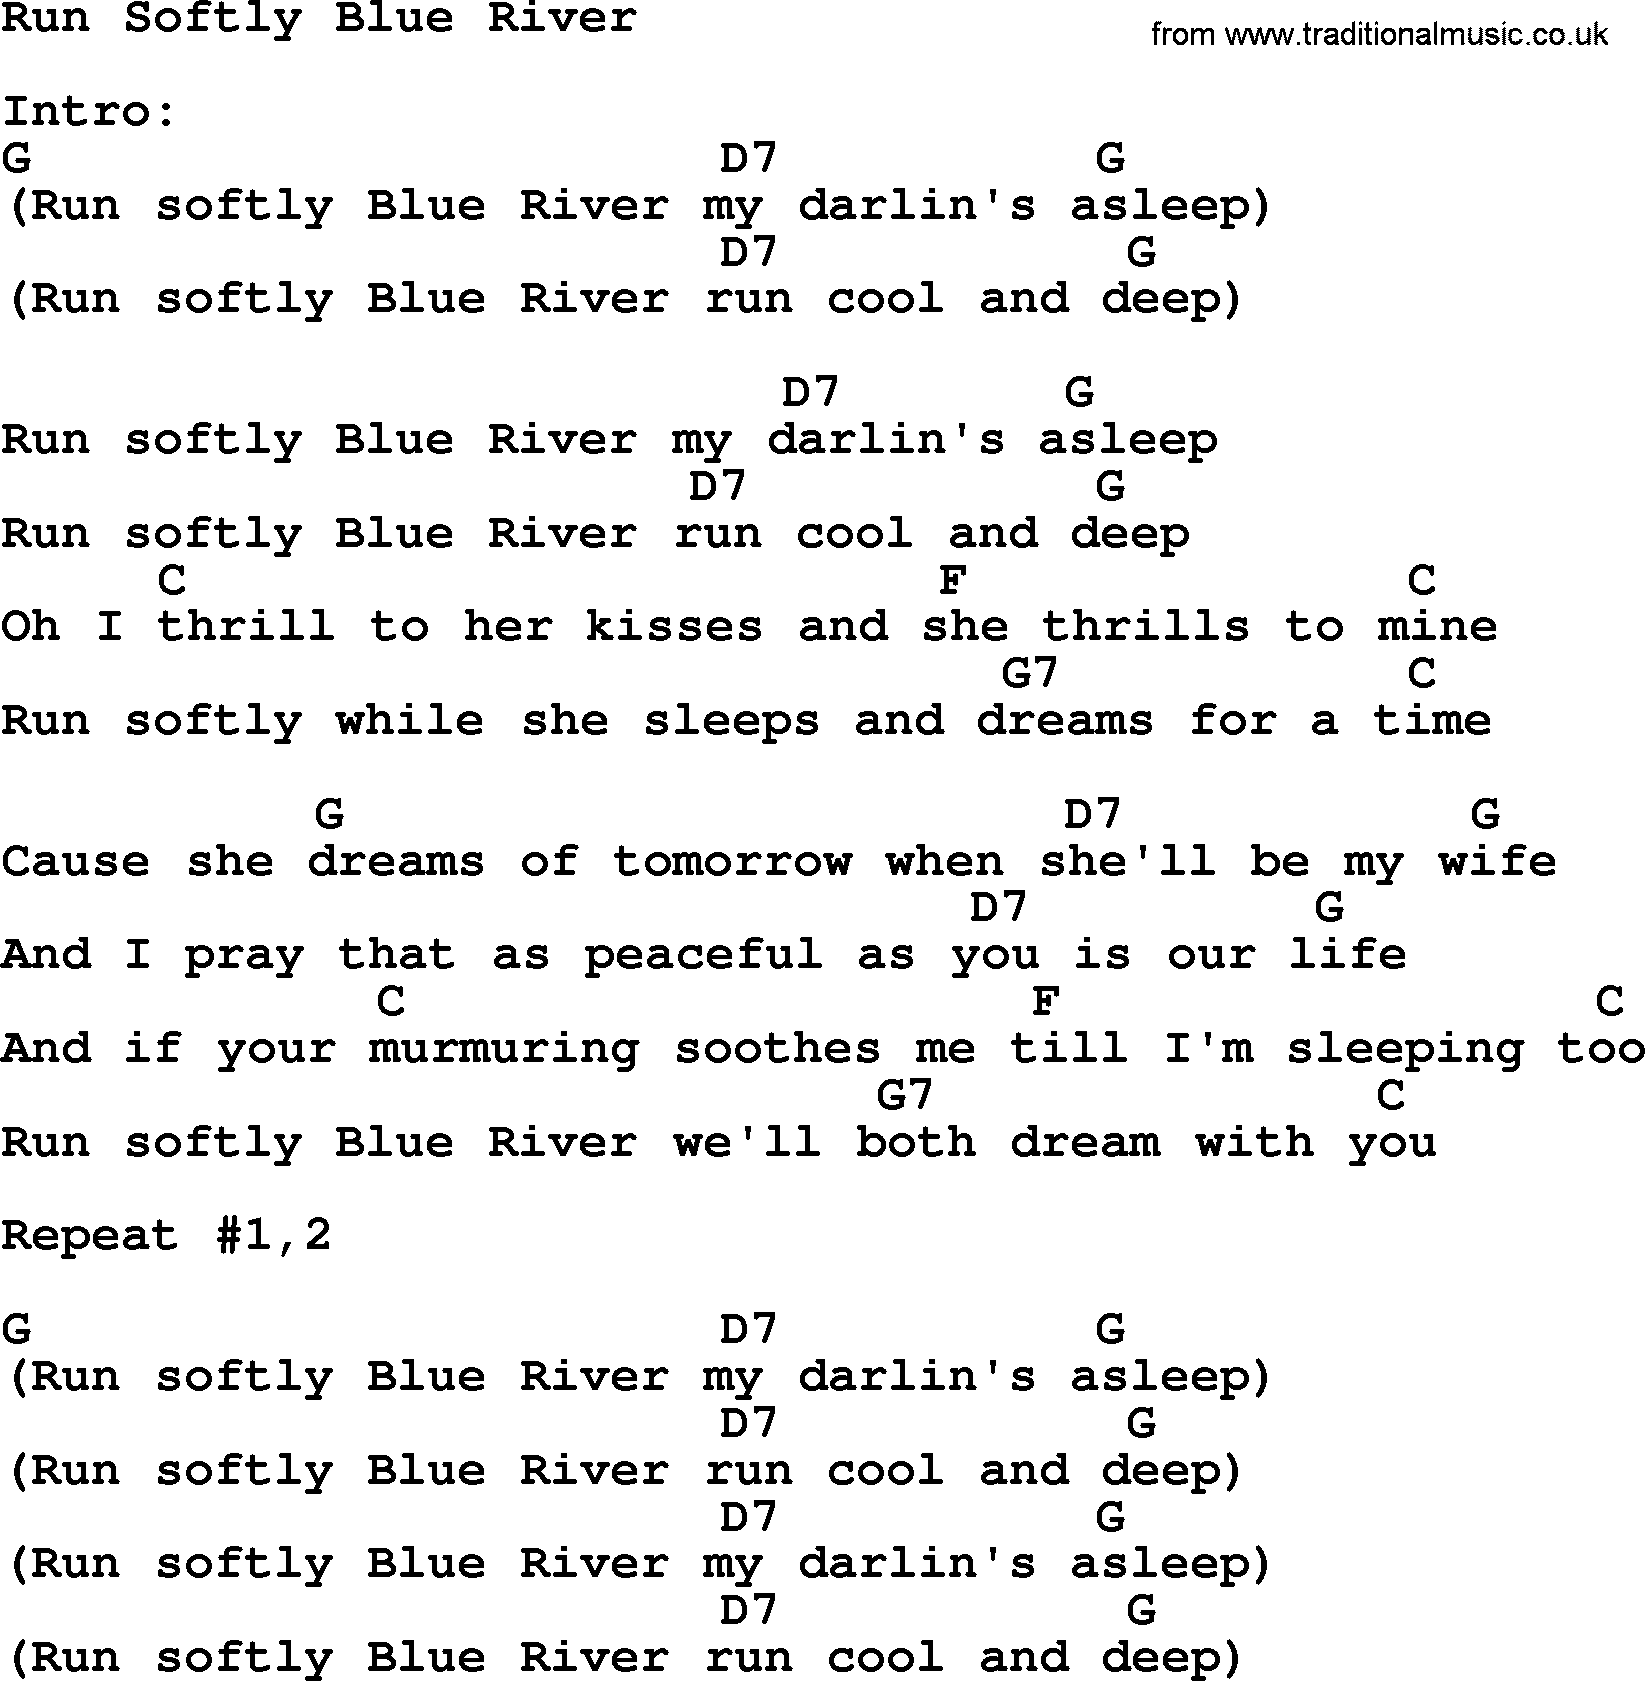 Johnny Cash song Run Softly Blue River, lyrics and chords